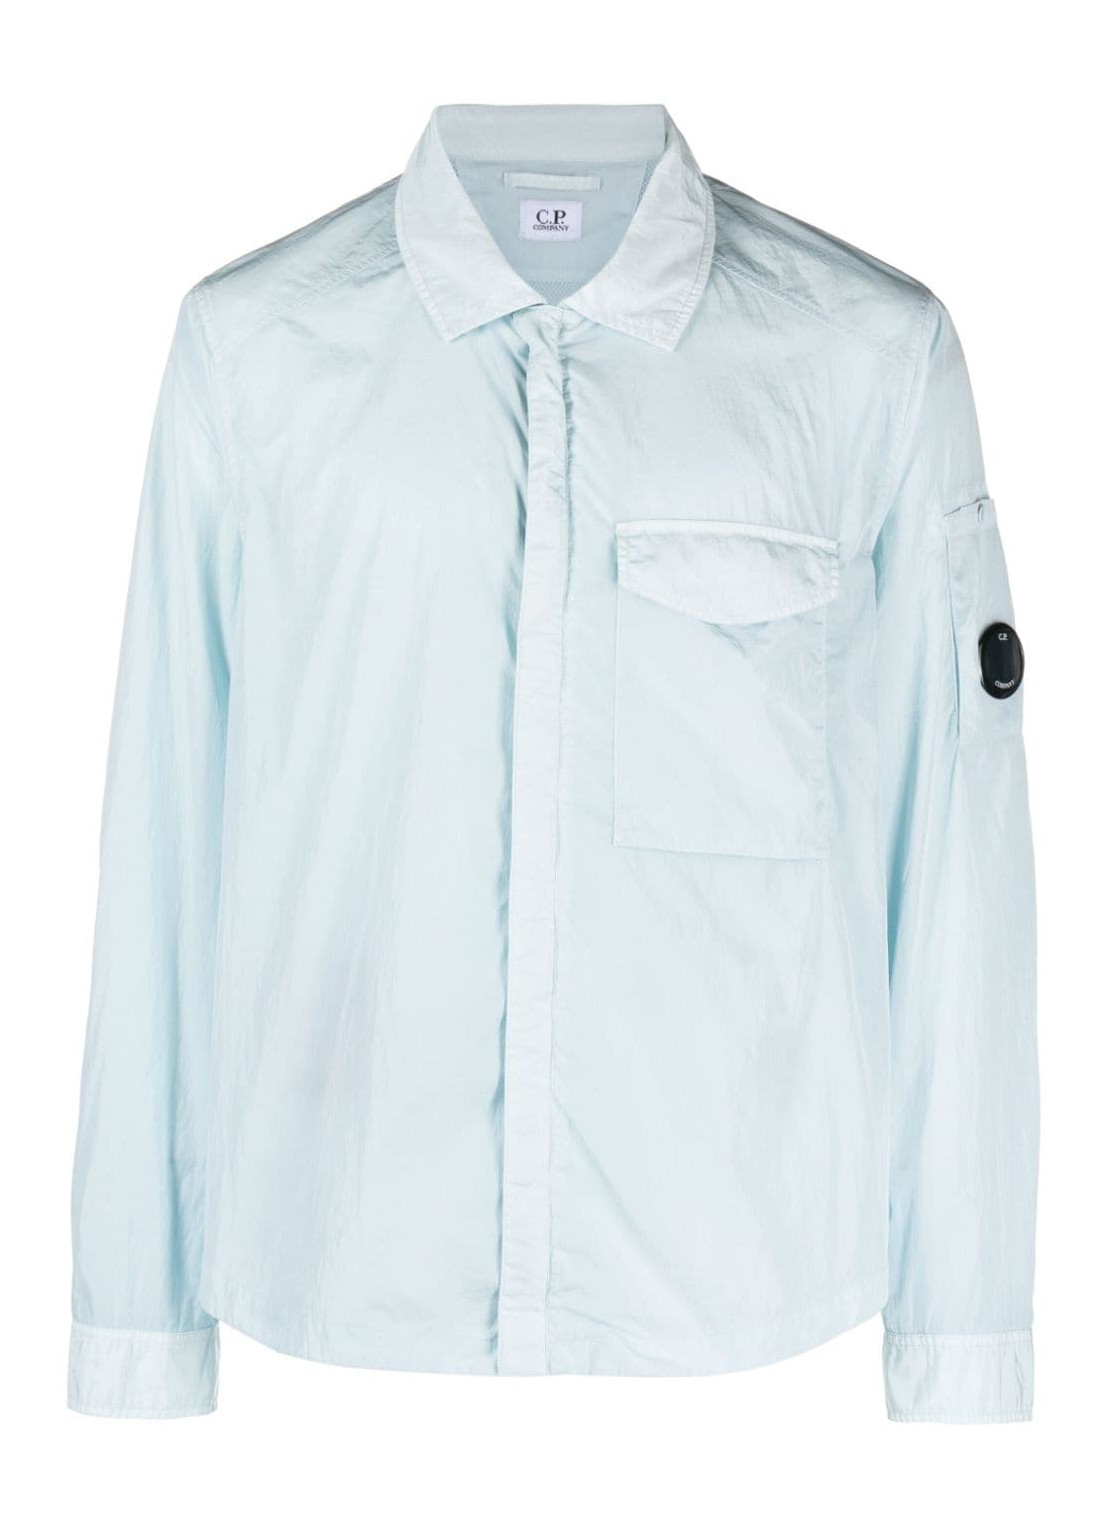 Outerwear c.p.company outerwear man chrome-r pocket overshirt 16cmos039a005904g 806 talla Azul
 